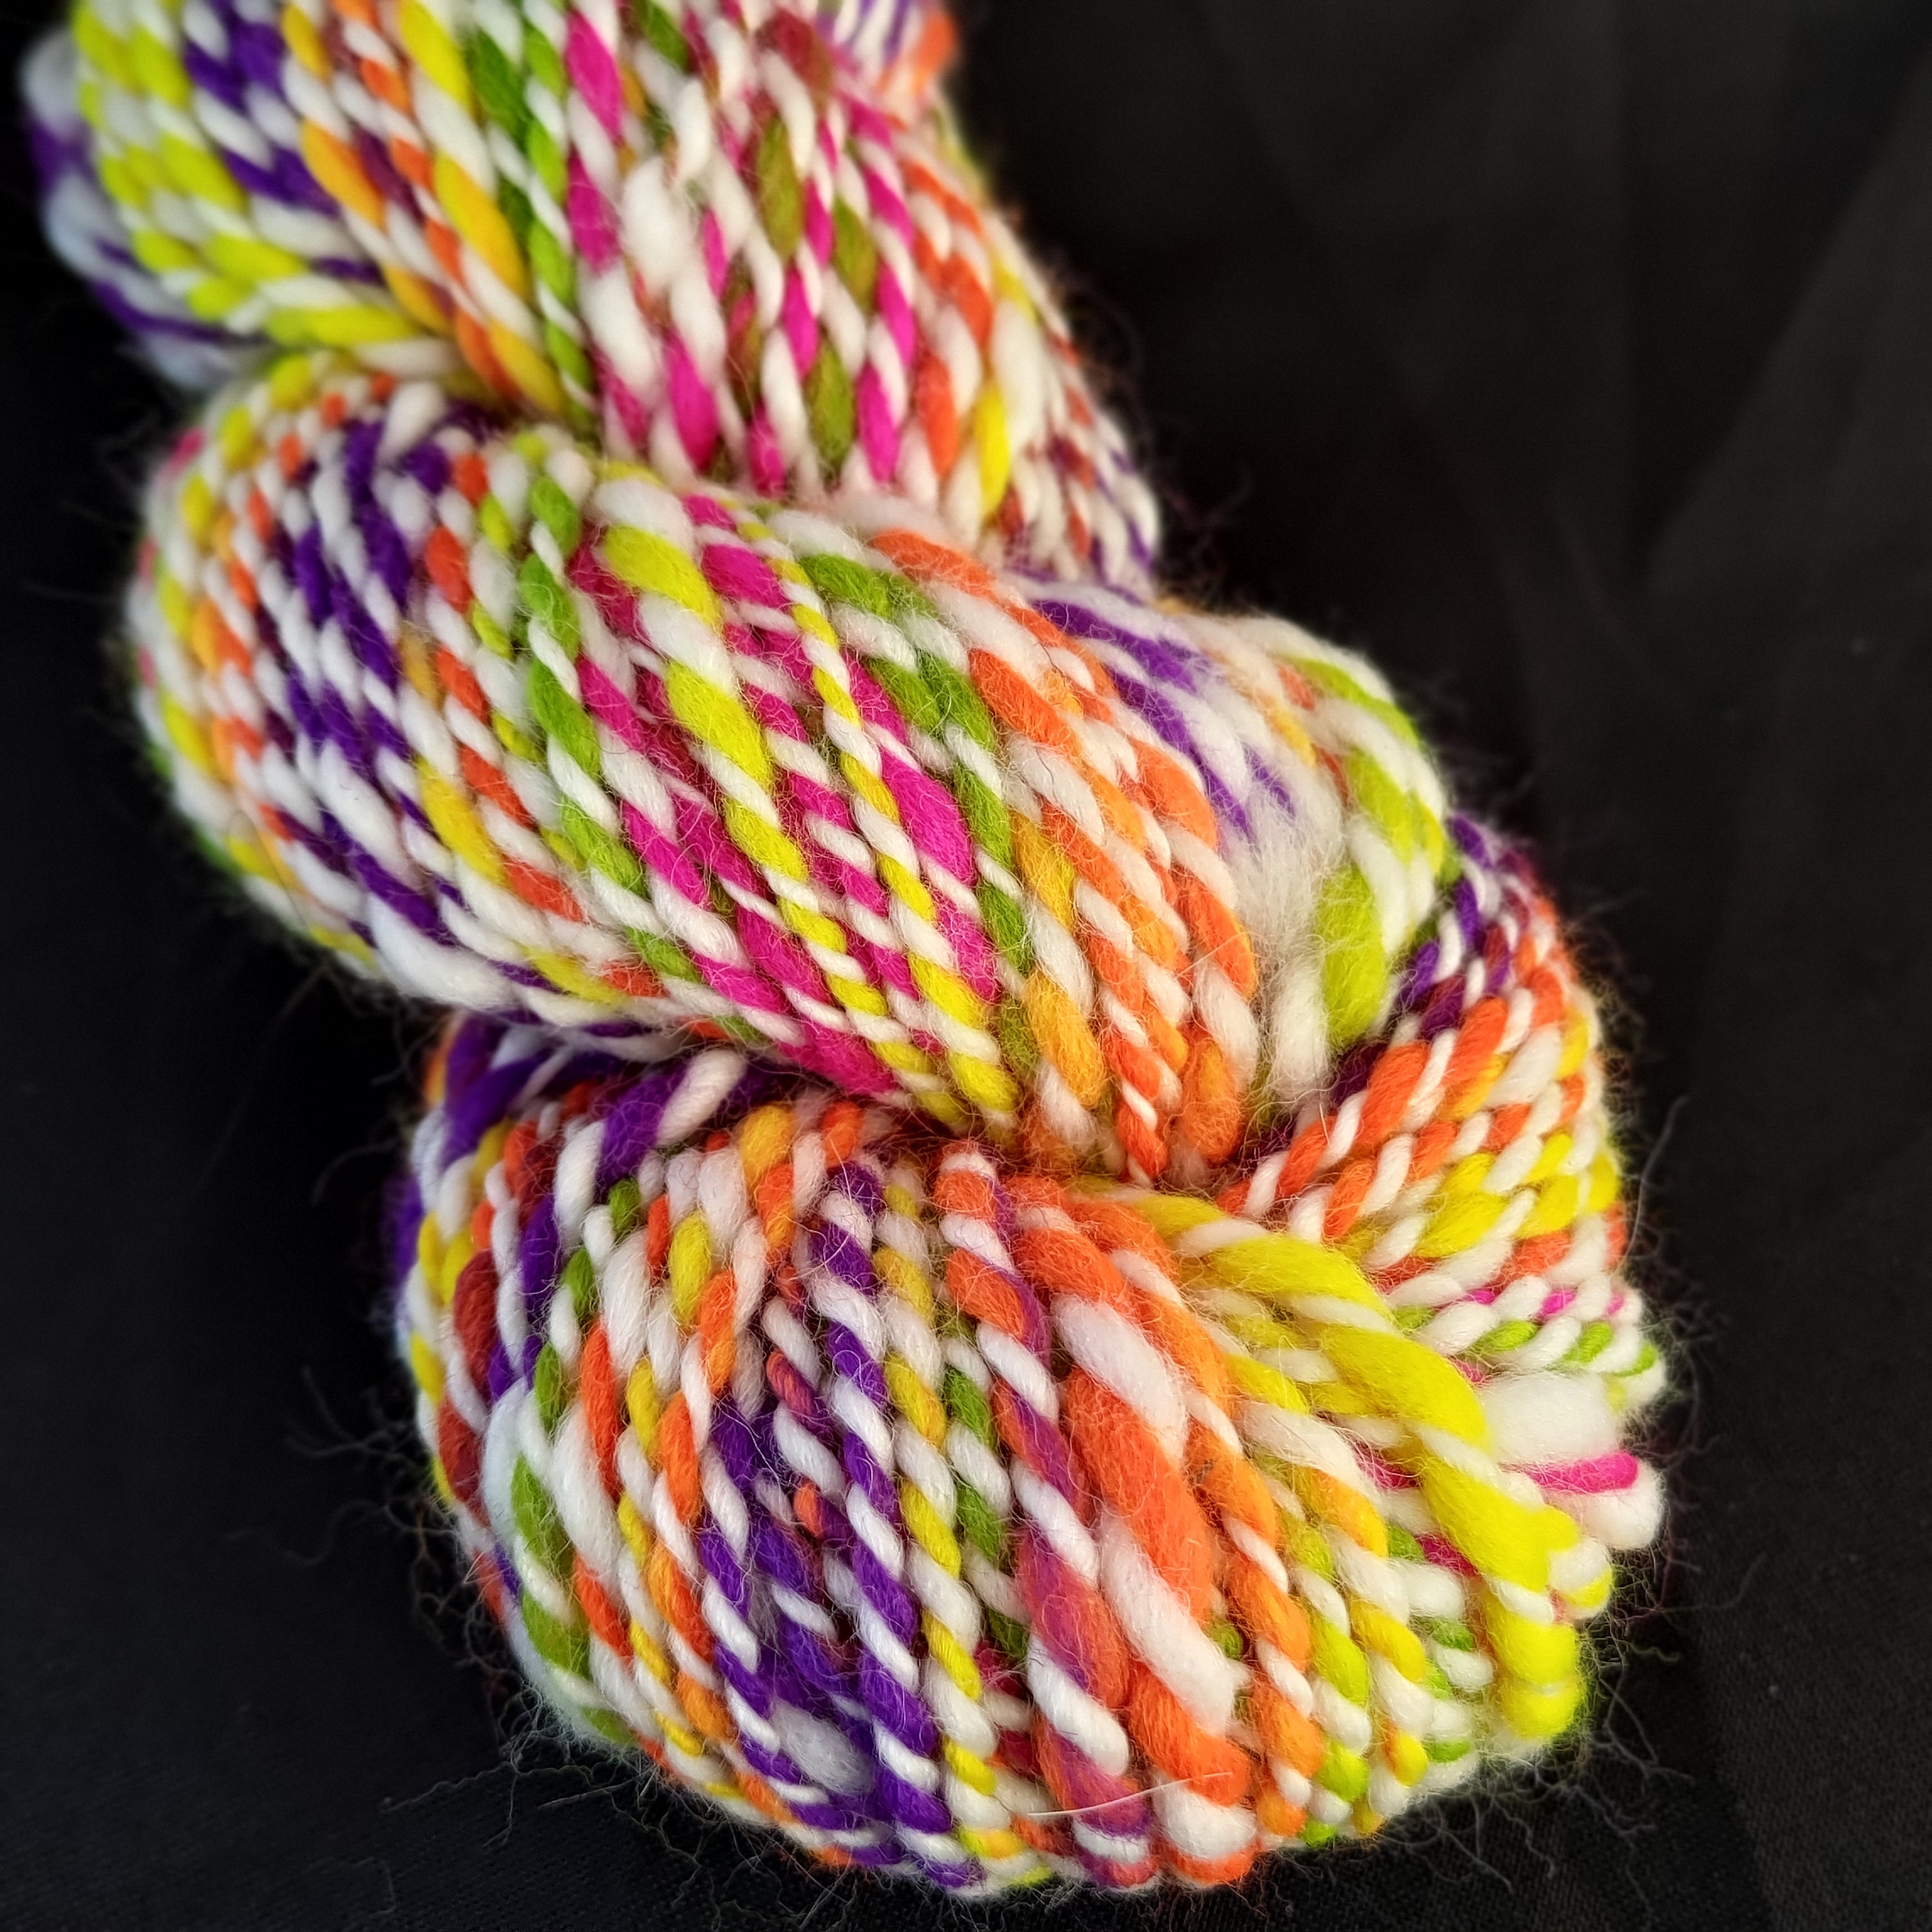 Rayon Cotton Yarn Saguaro 225 Yards Mary Gavan Yarns Textured Yarn Teal  Purple Multi Color Yarn Knitters Yarn Knit 